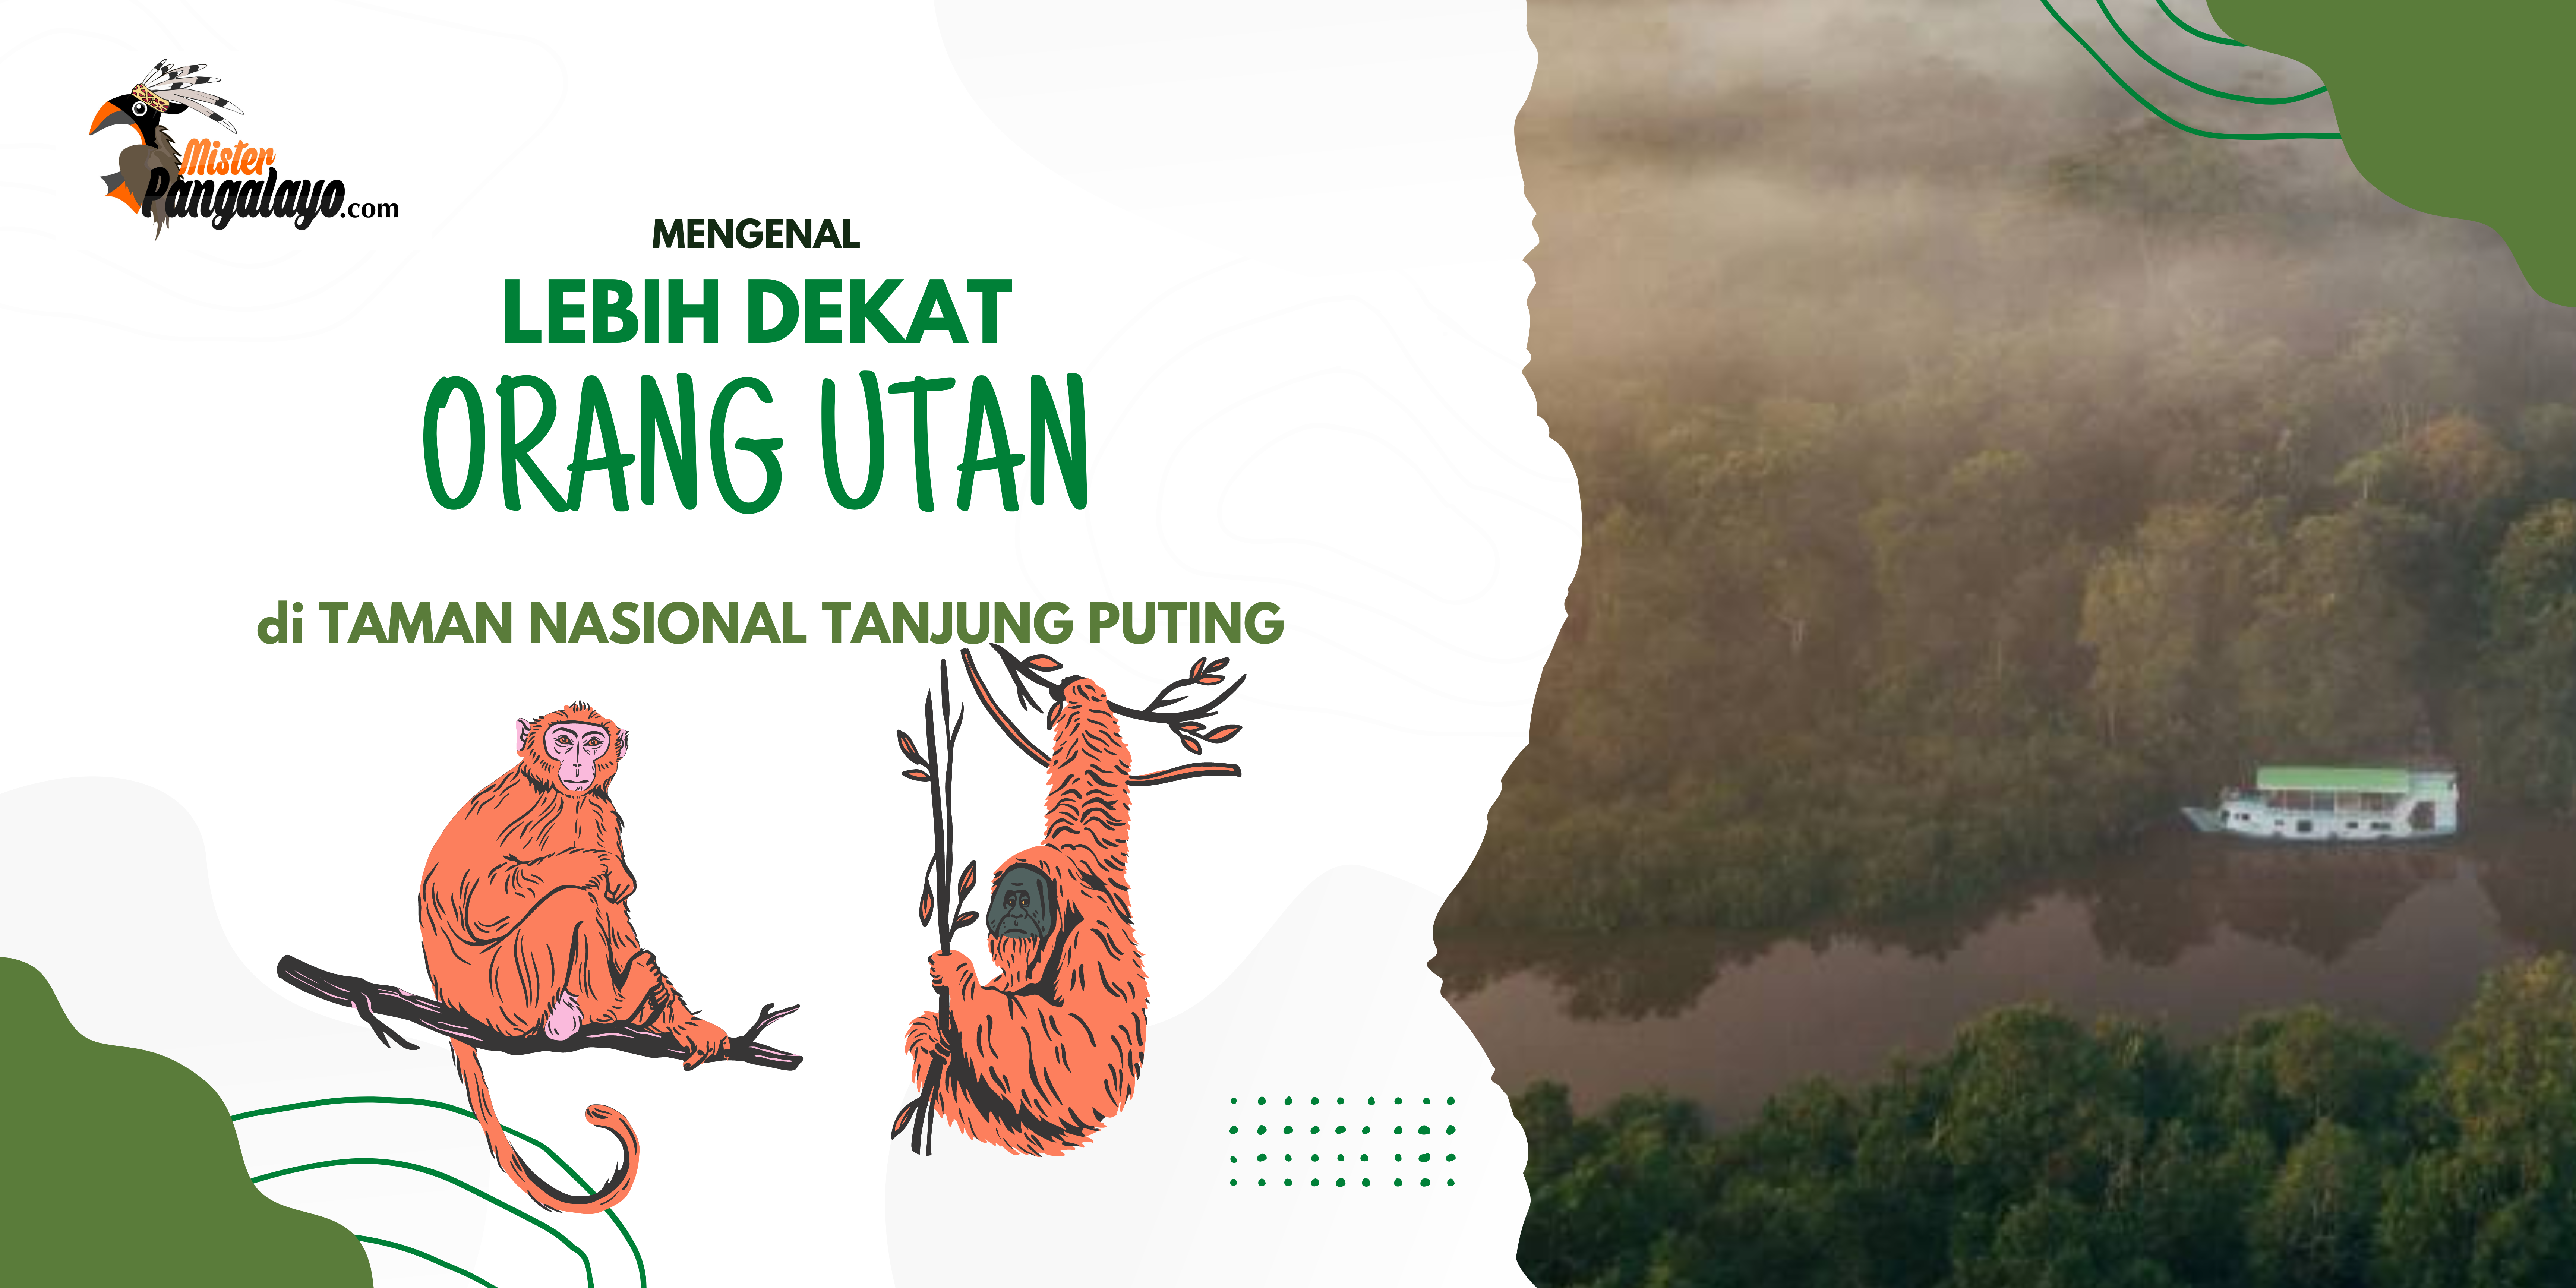 Taman Nasional Tanjung Puting